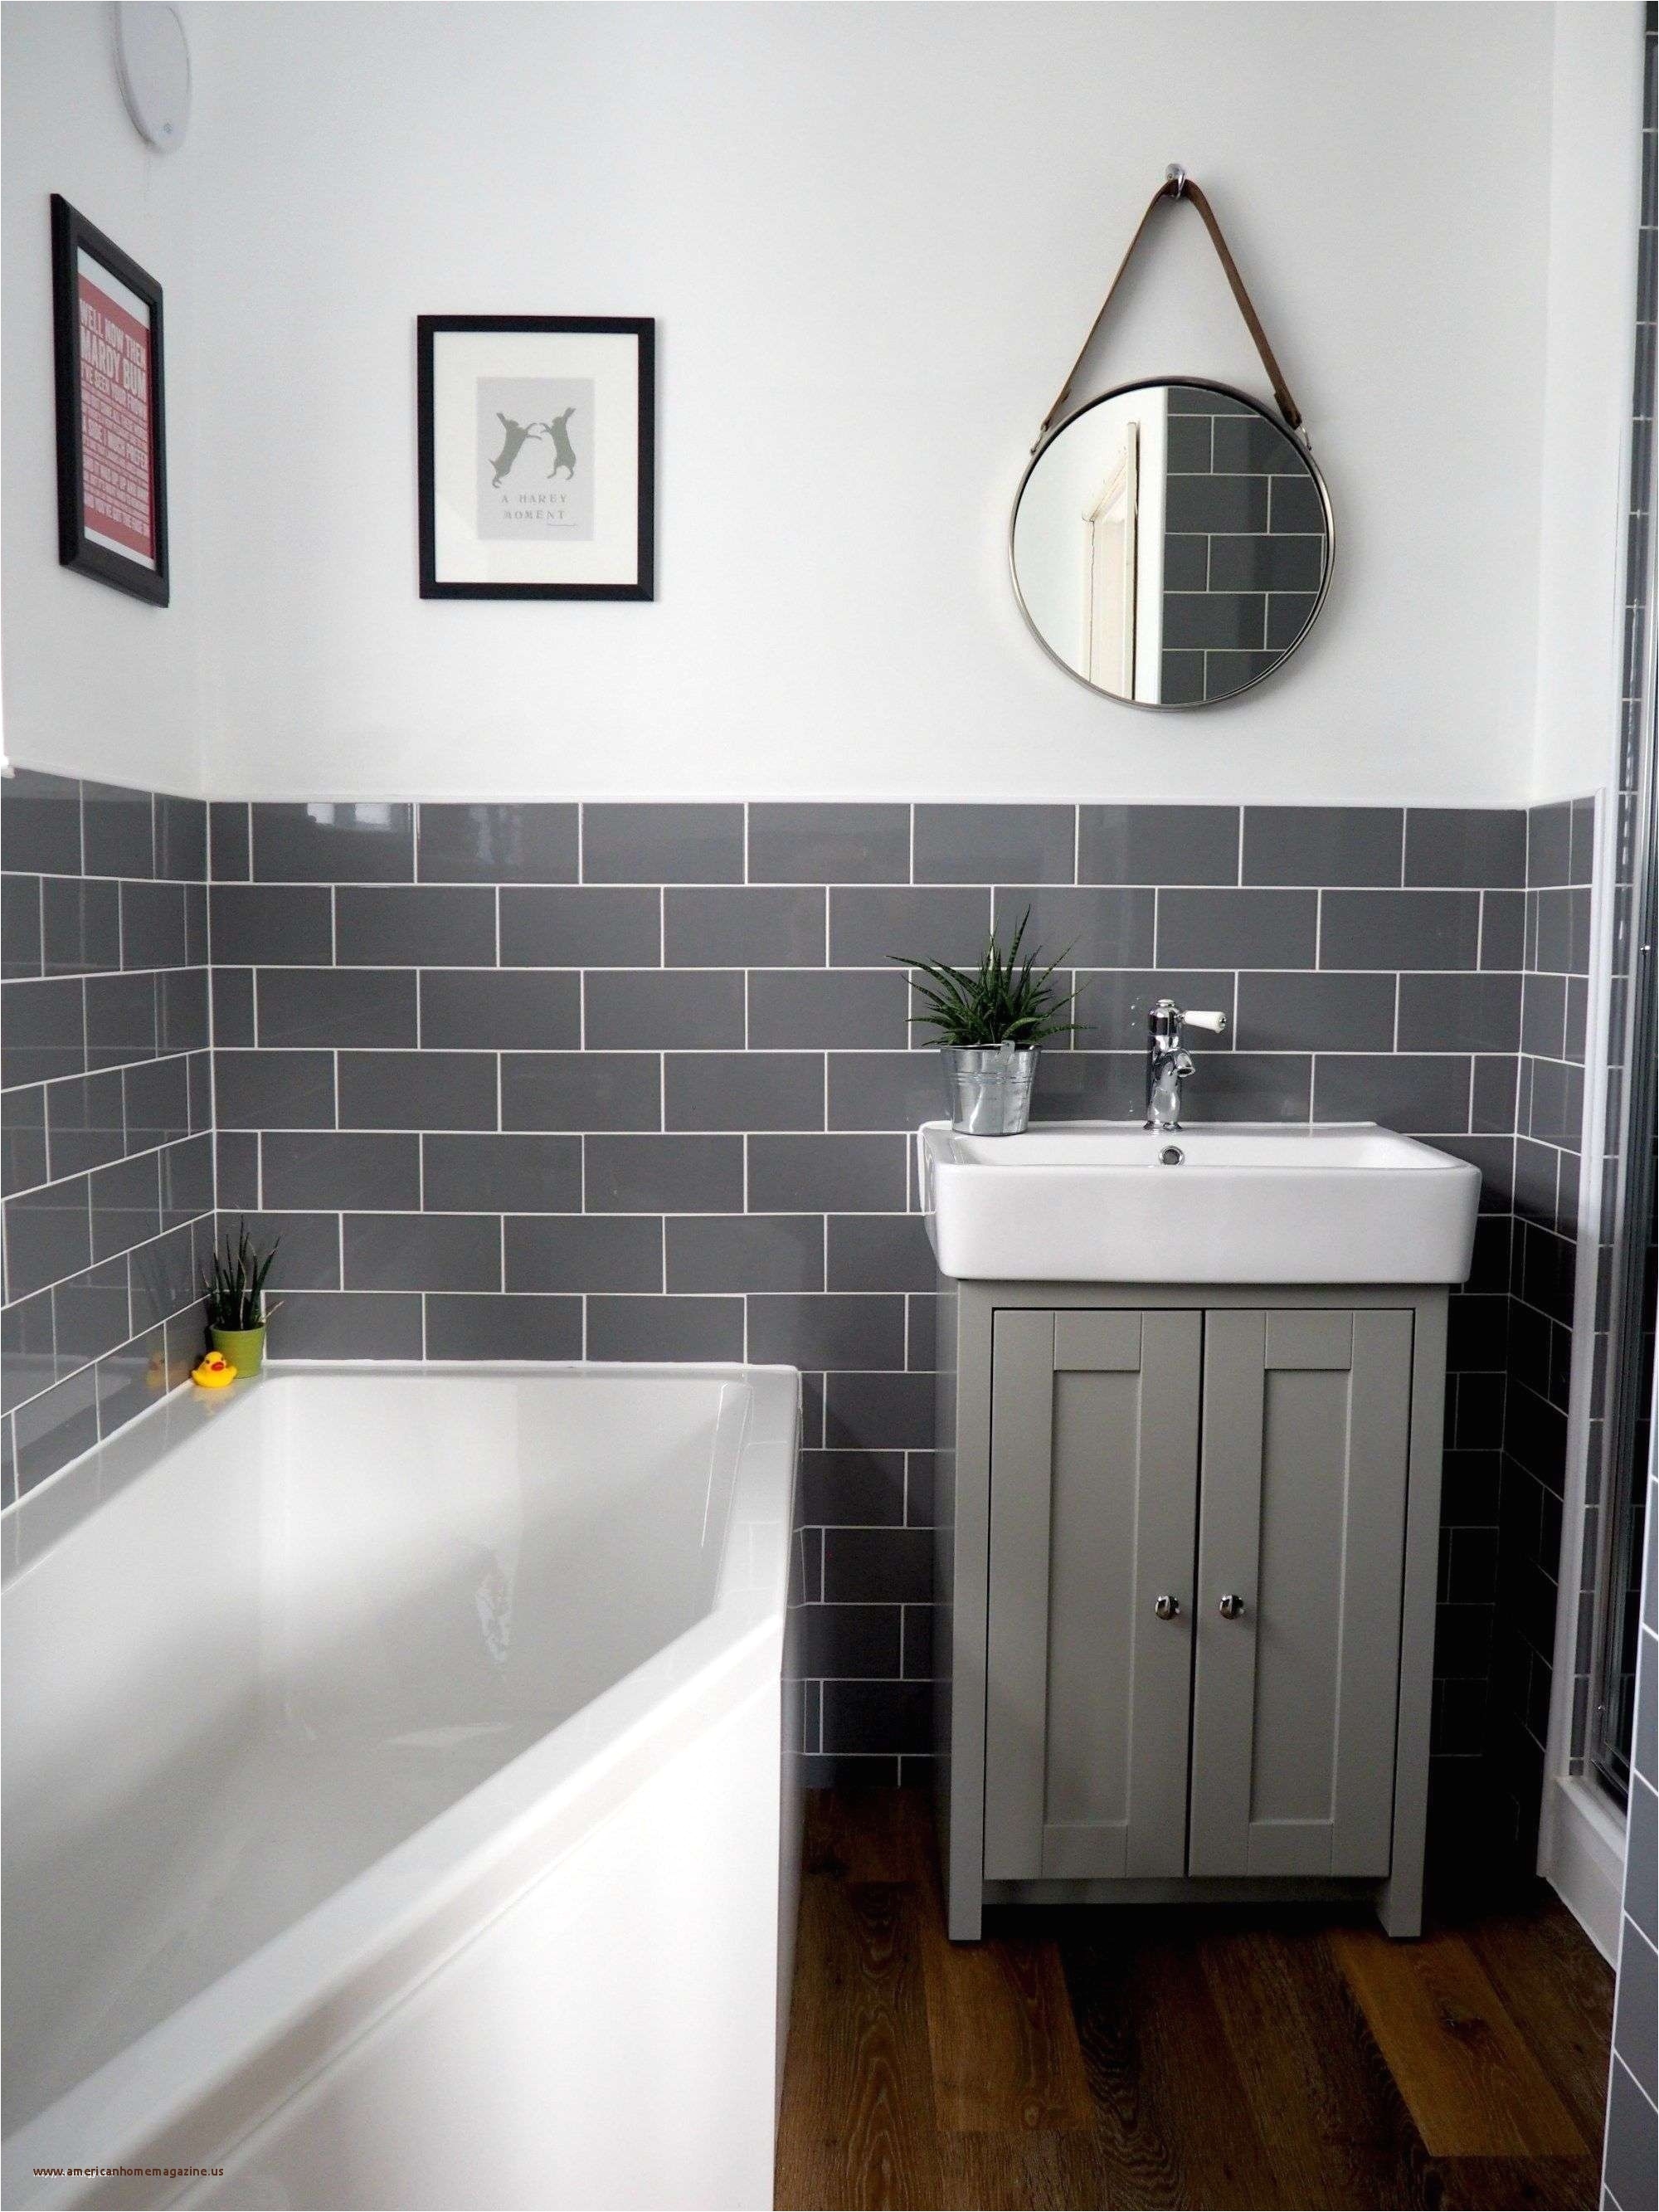 Bathroom Tile Design Ideas Uk How to Tile A Bathroom Floor Video Finest Bathroom Floor Tile Design